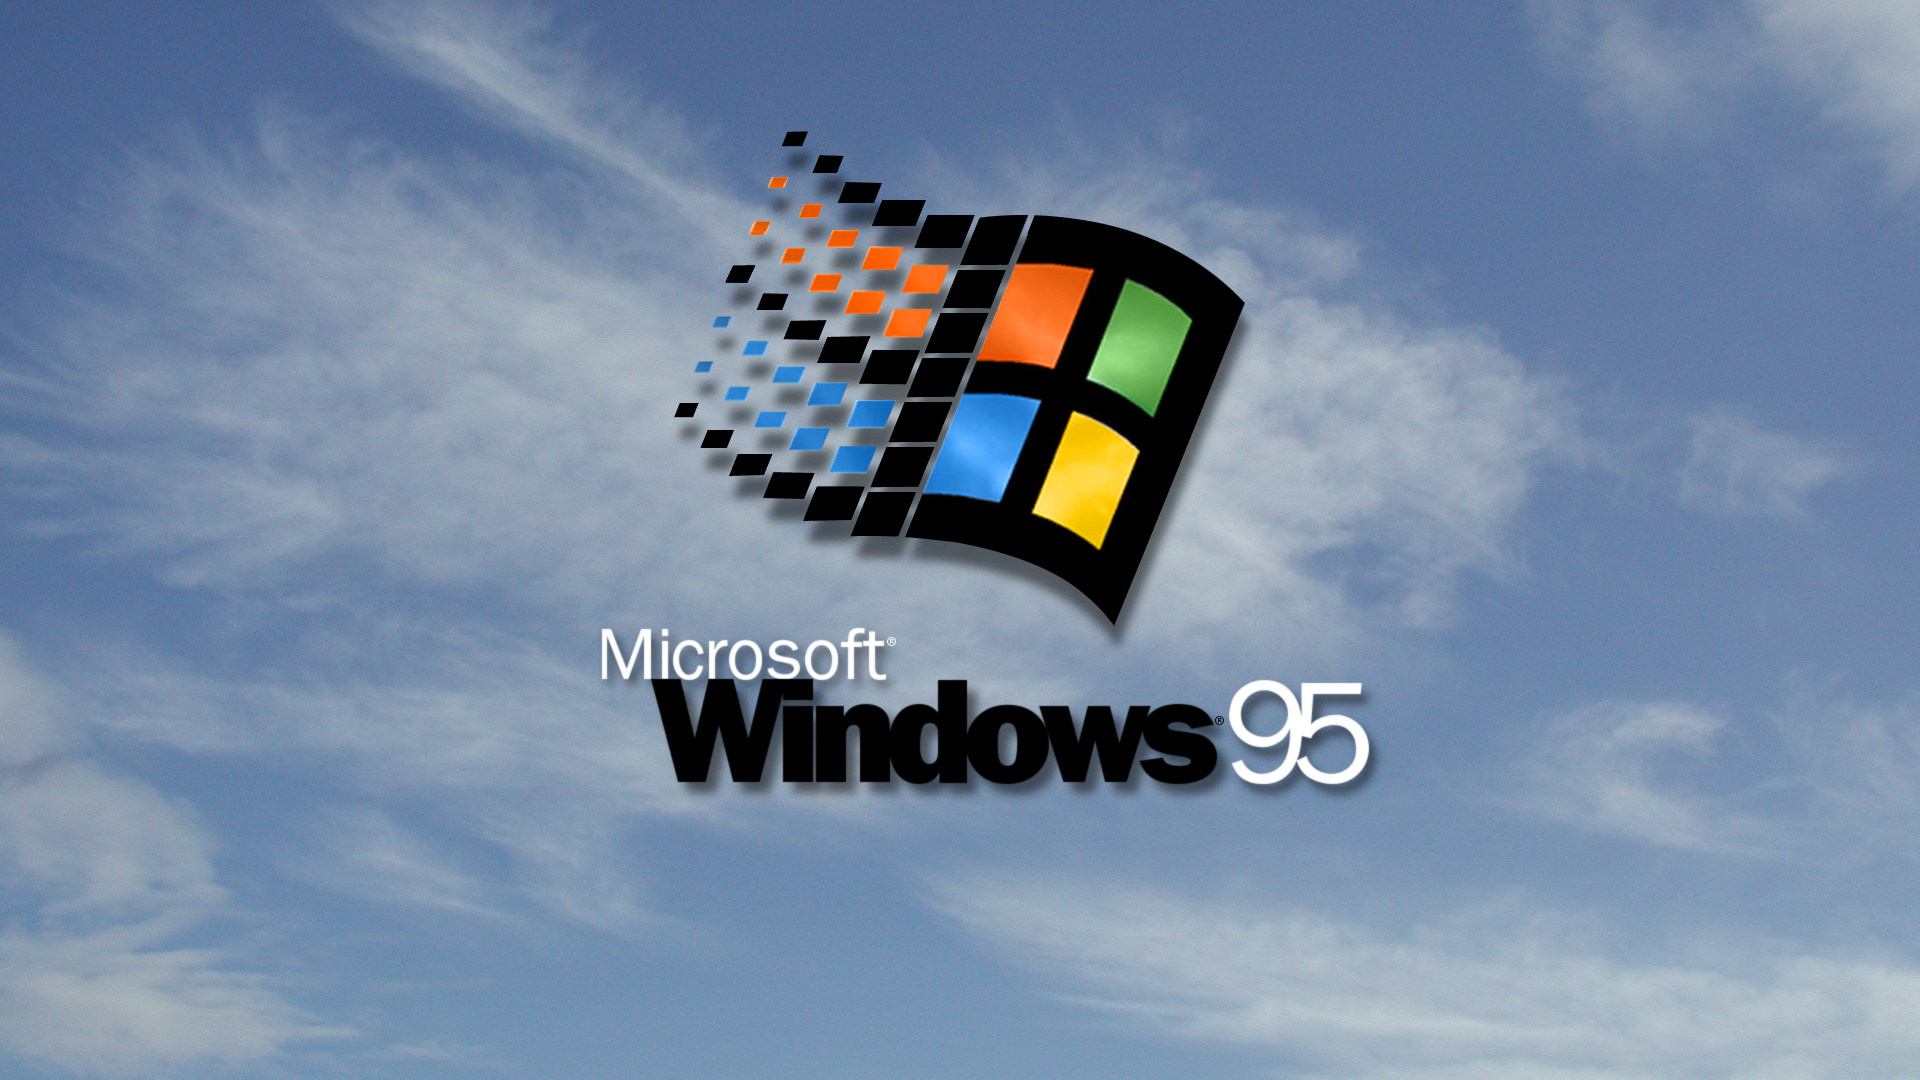 General 1920x1080 1990s Windows 95 Microsoft logo operating system